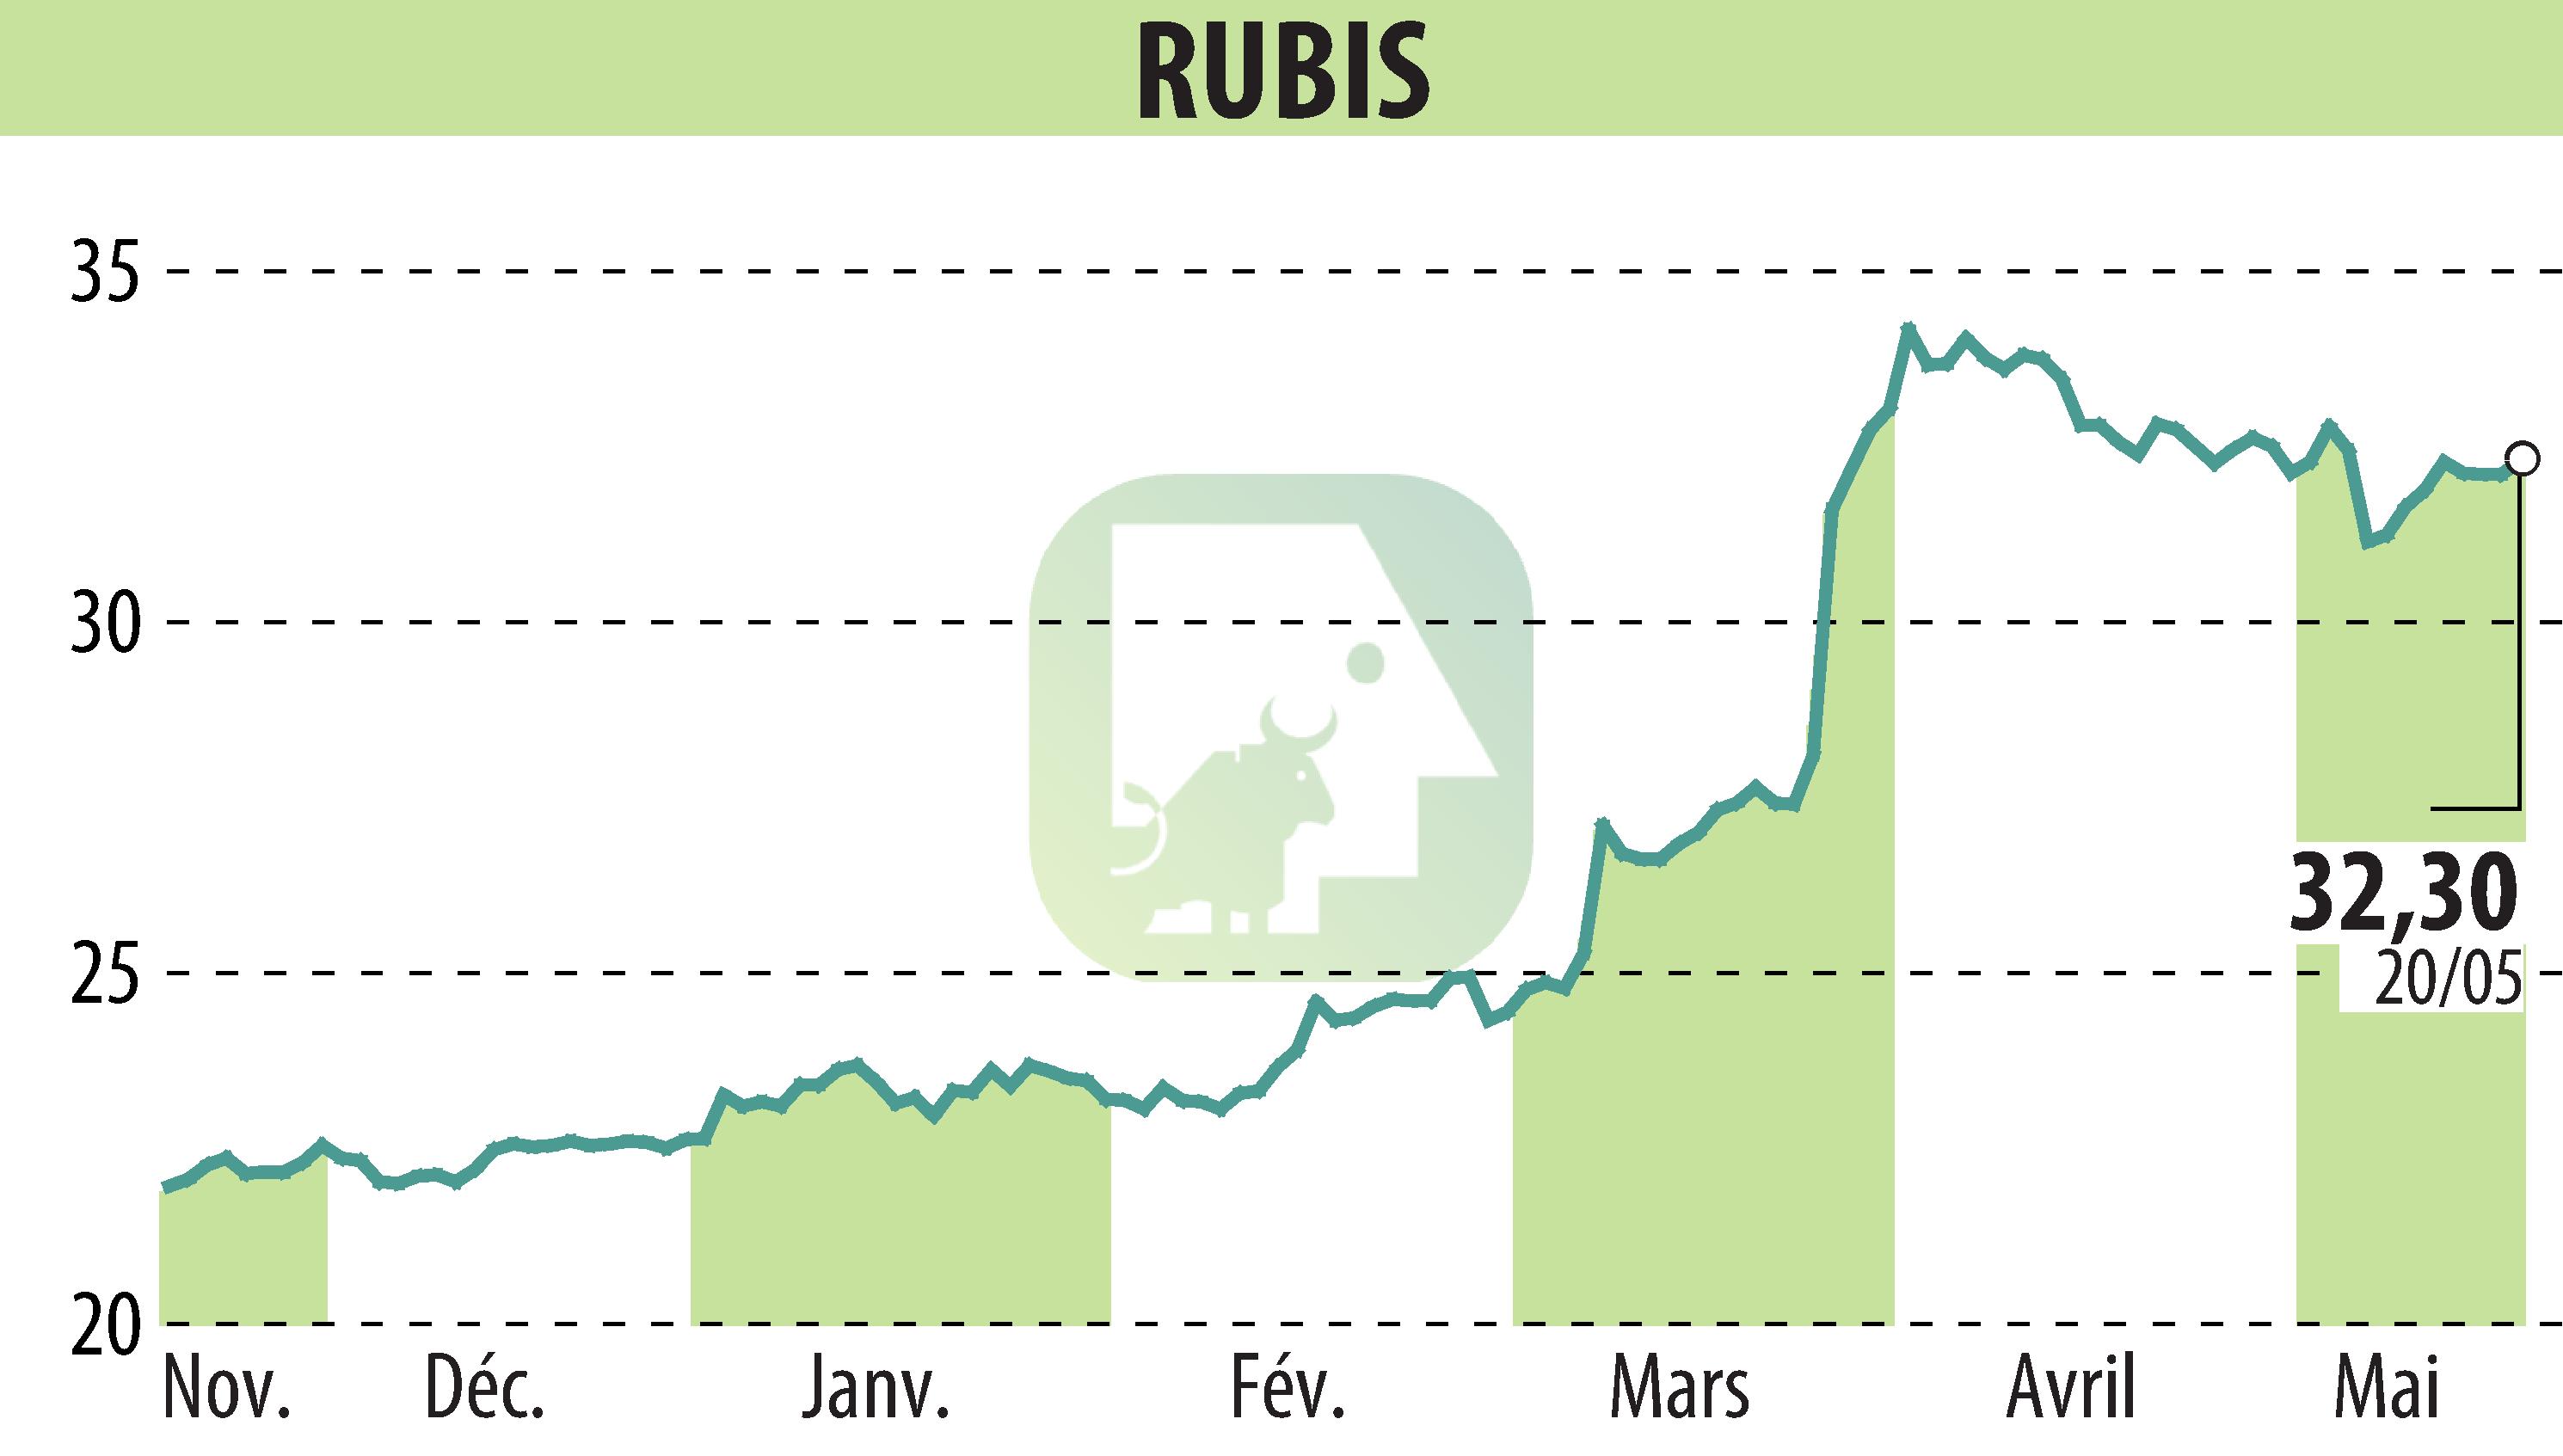 Stock price chart of RUBIS (EPA:RUI) showing fluctuations.